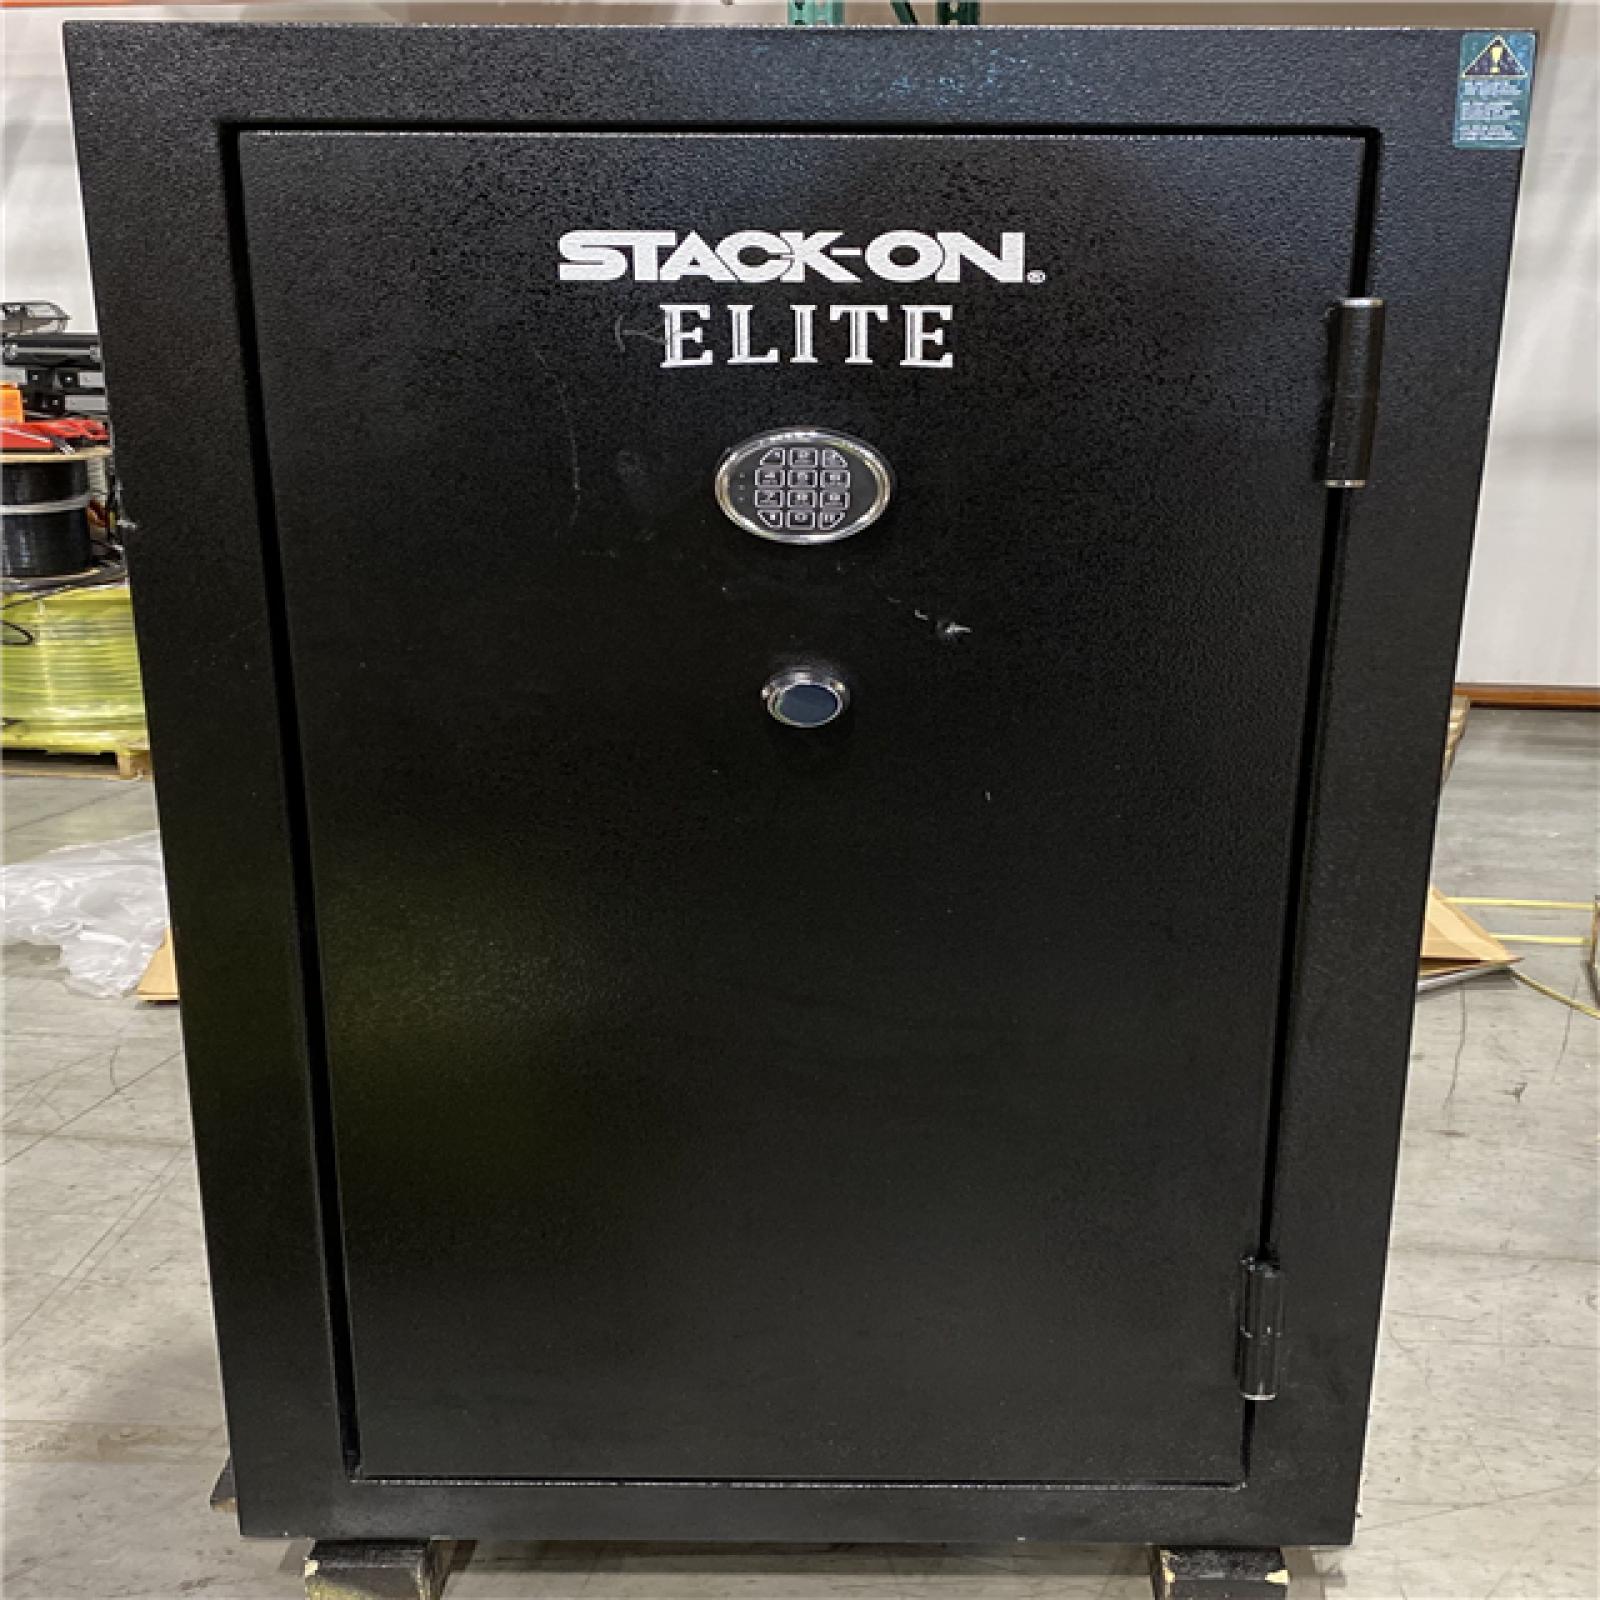 DALLAS LOCATION -  Stack-On Elite 30-Gun Fireproof Safe with Electronic Lock Gun Safe, Black